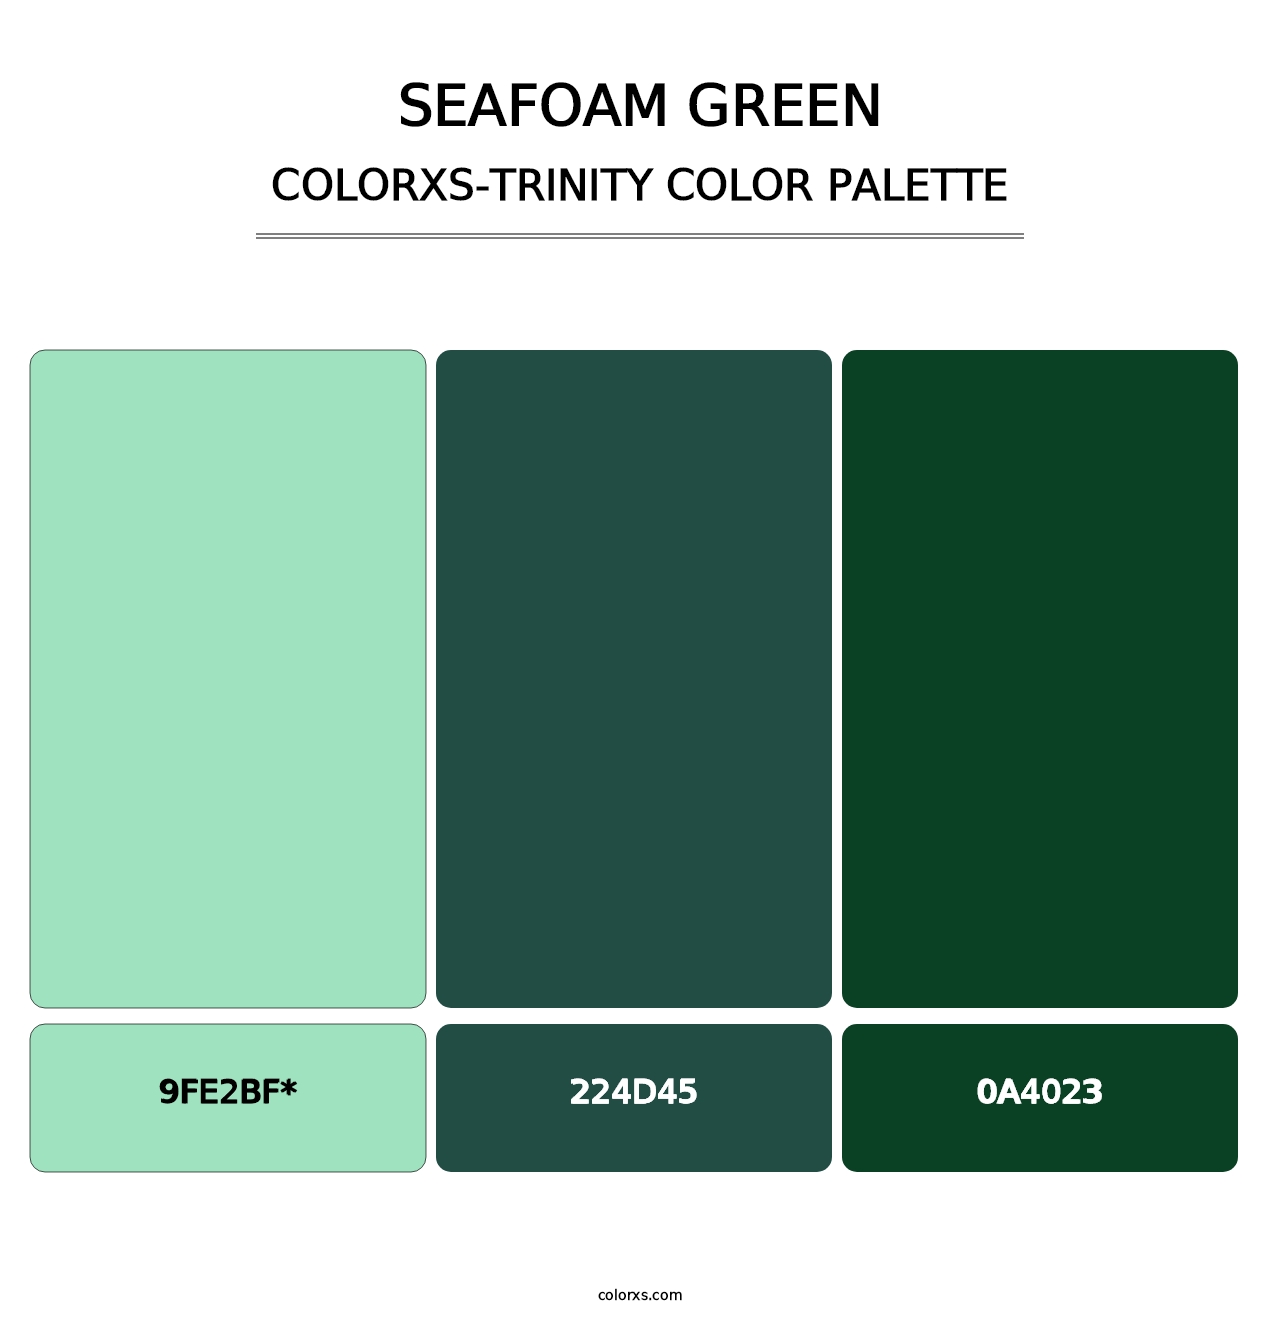 Seafoam Green - Colorxs Trinity Palette